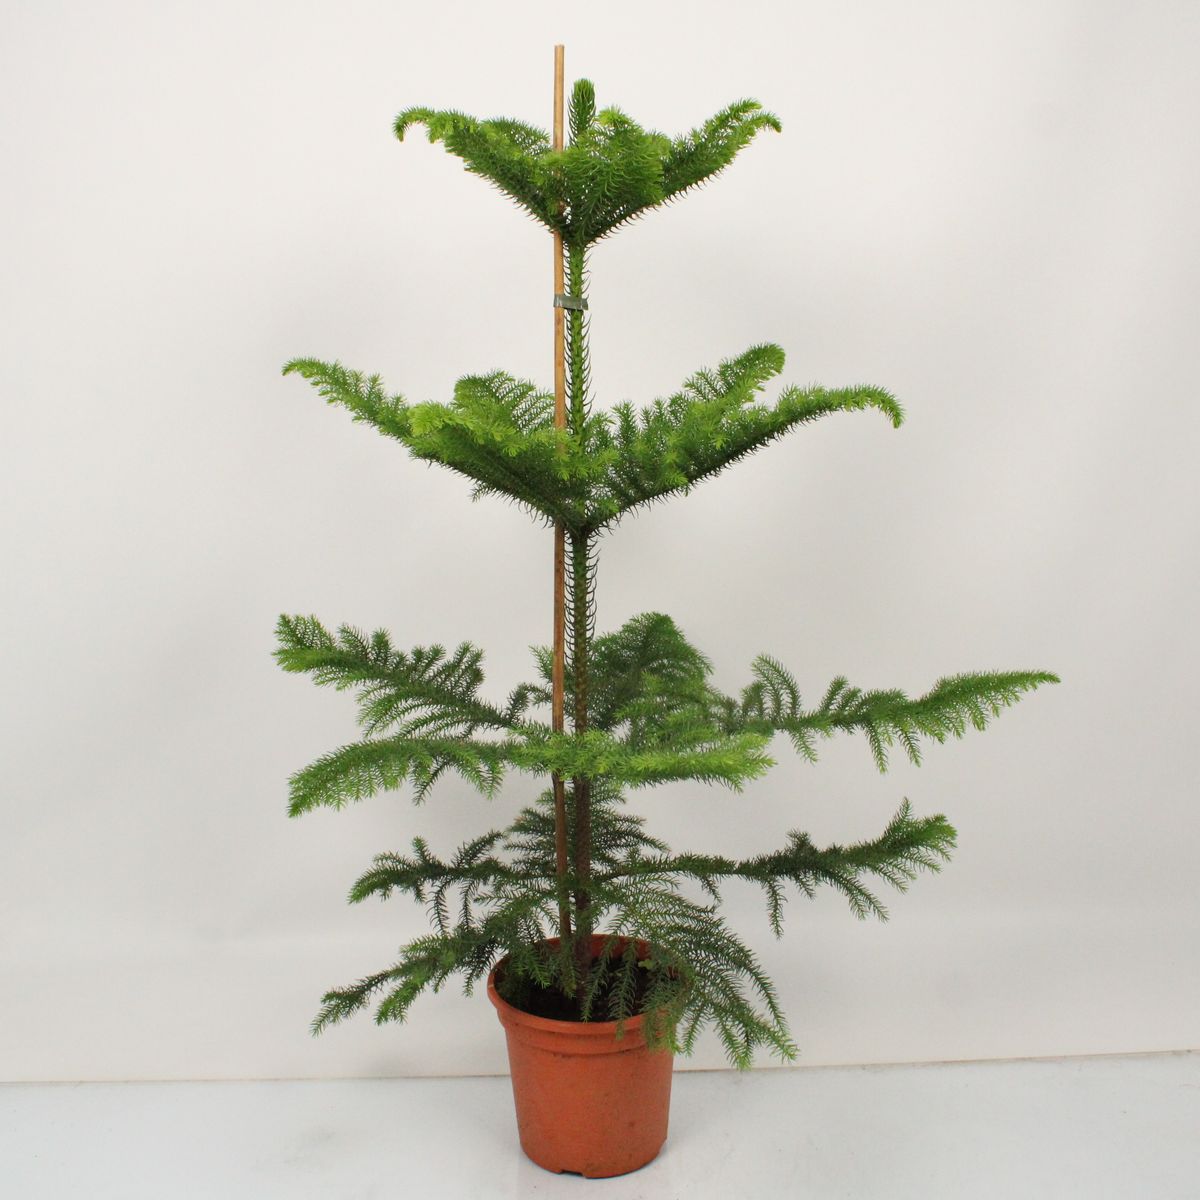 1x FloraStore 95 cm Araucaria Heterophylla House Plant chambered Pot Size 24 cm